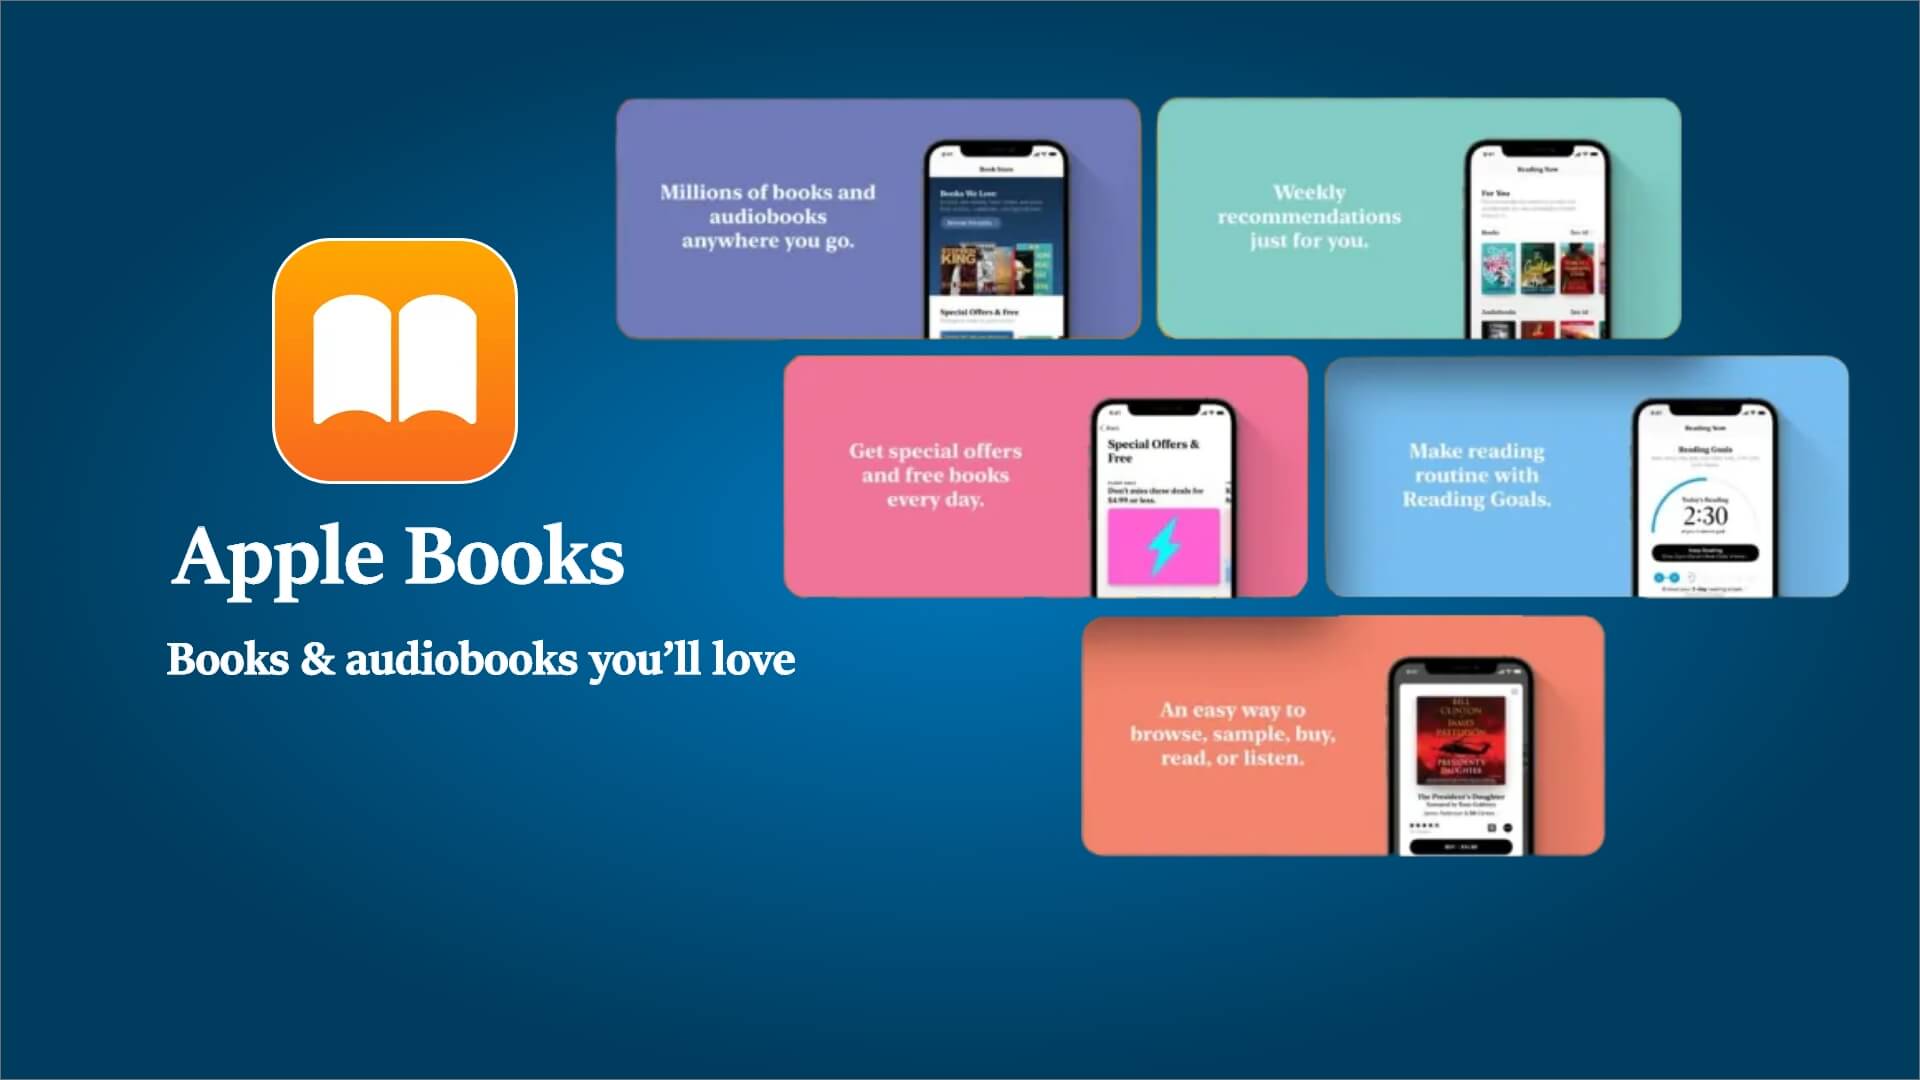 Apple Books